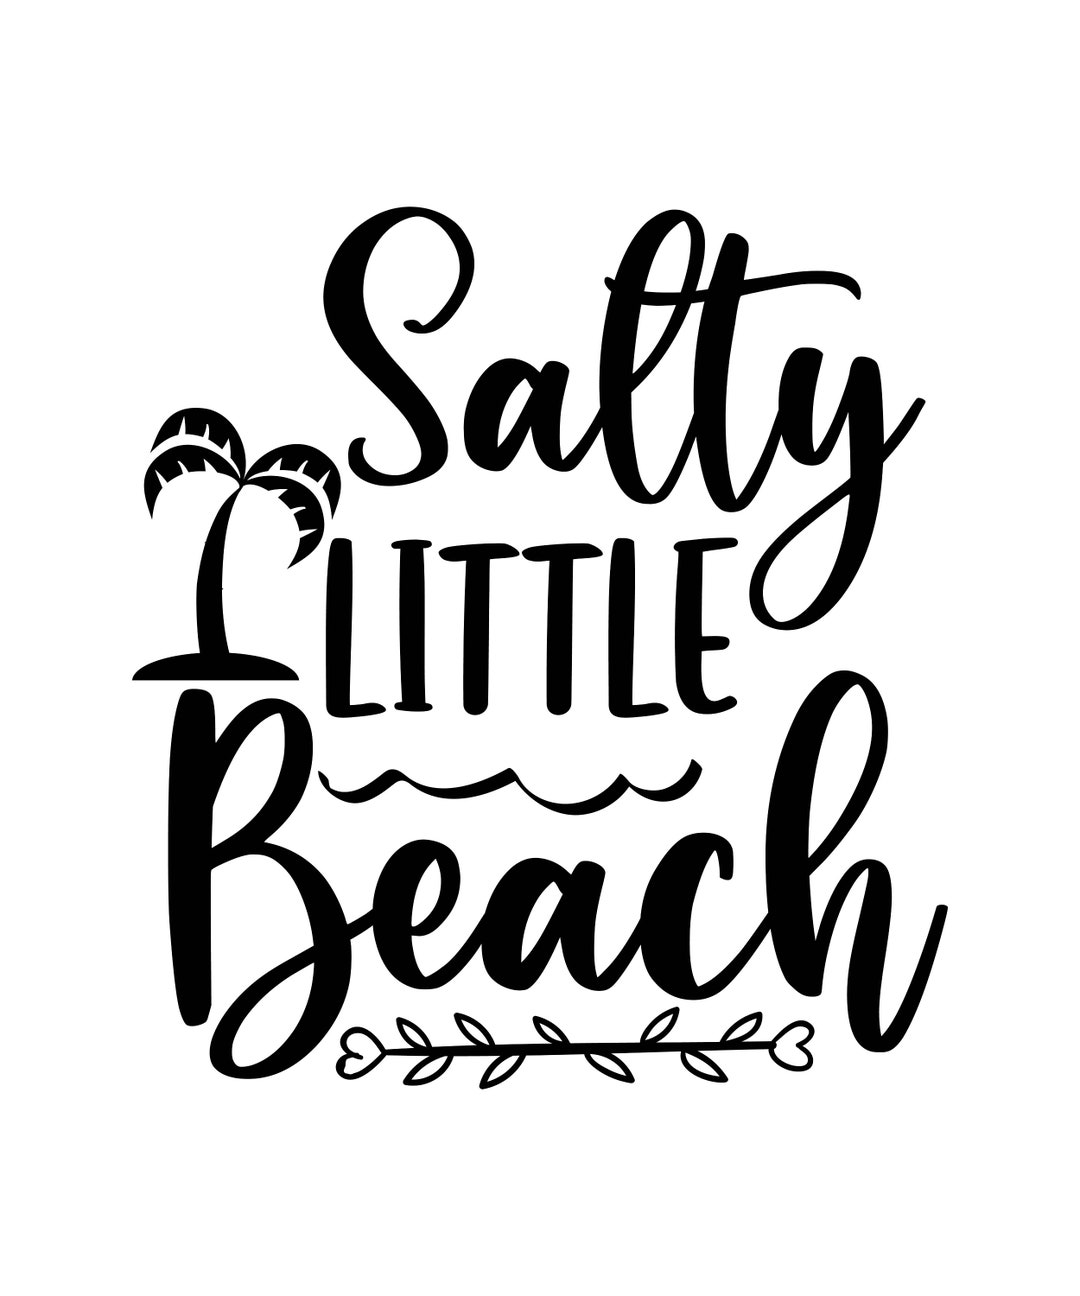 Qualityperfectionus Digital Download Salty Little Beach - Etsy